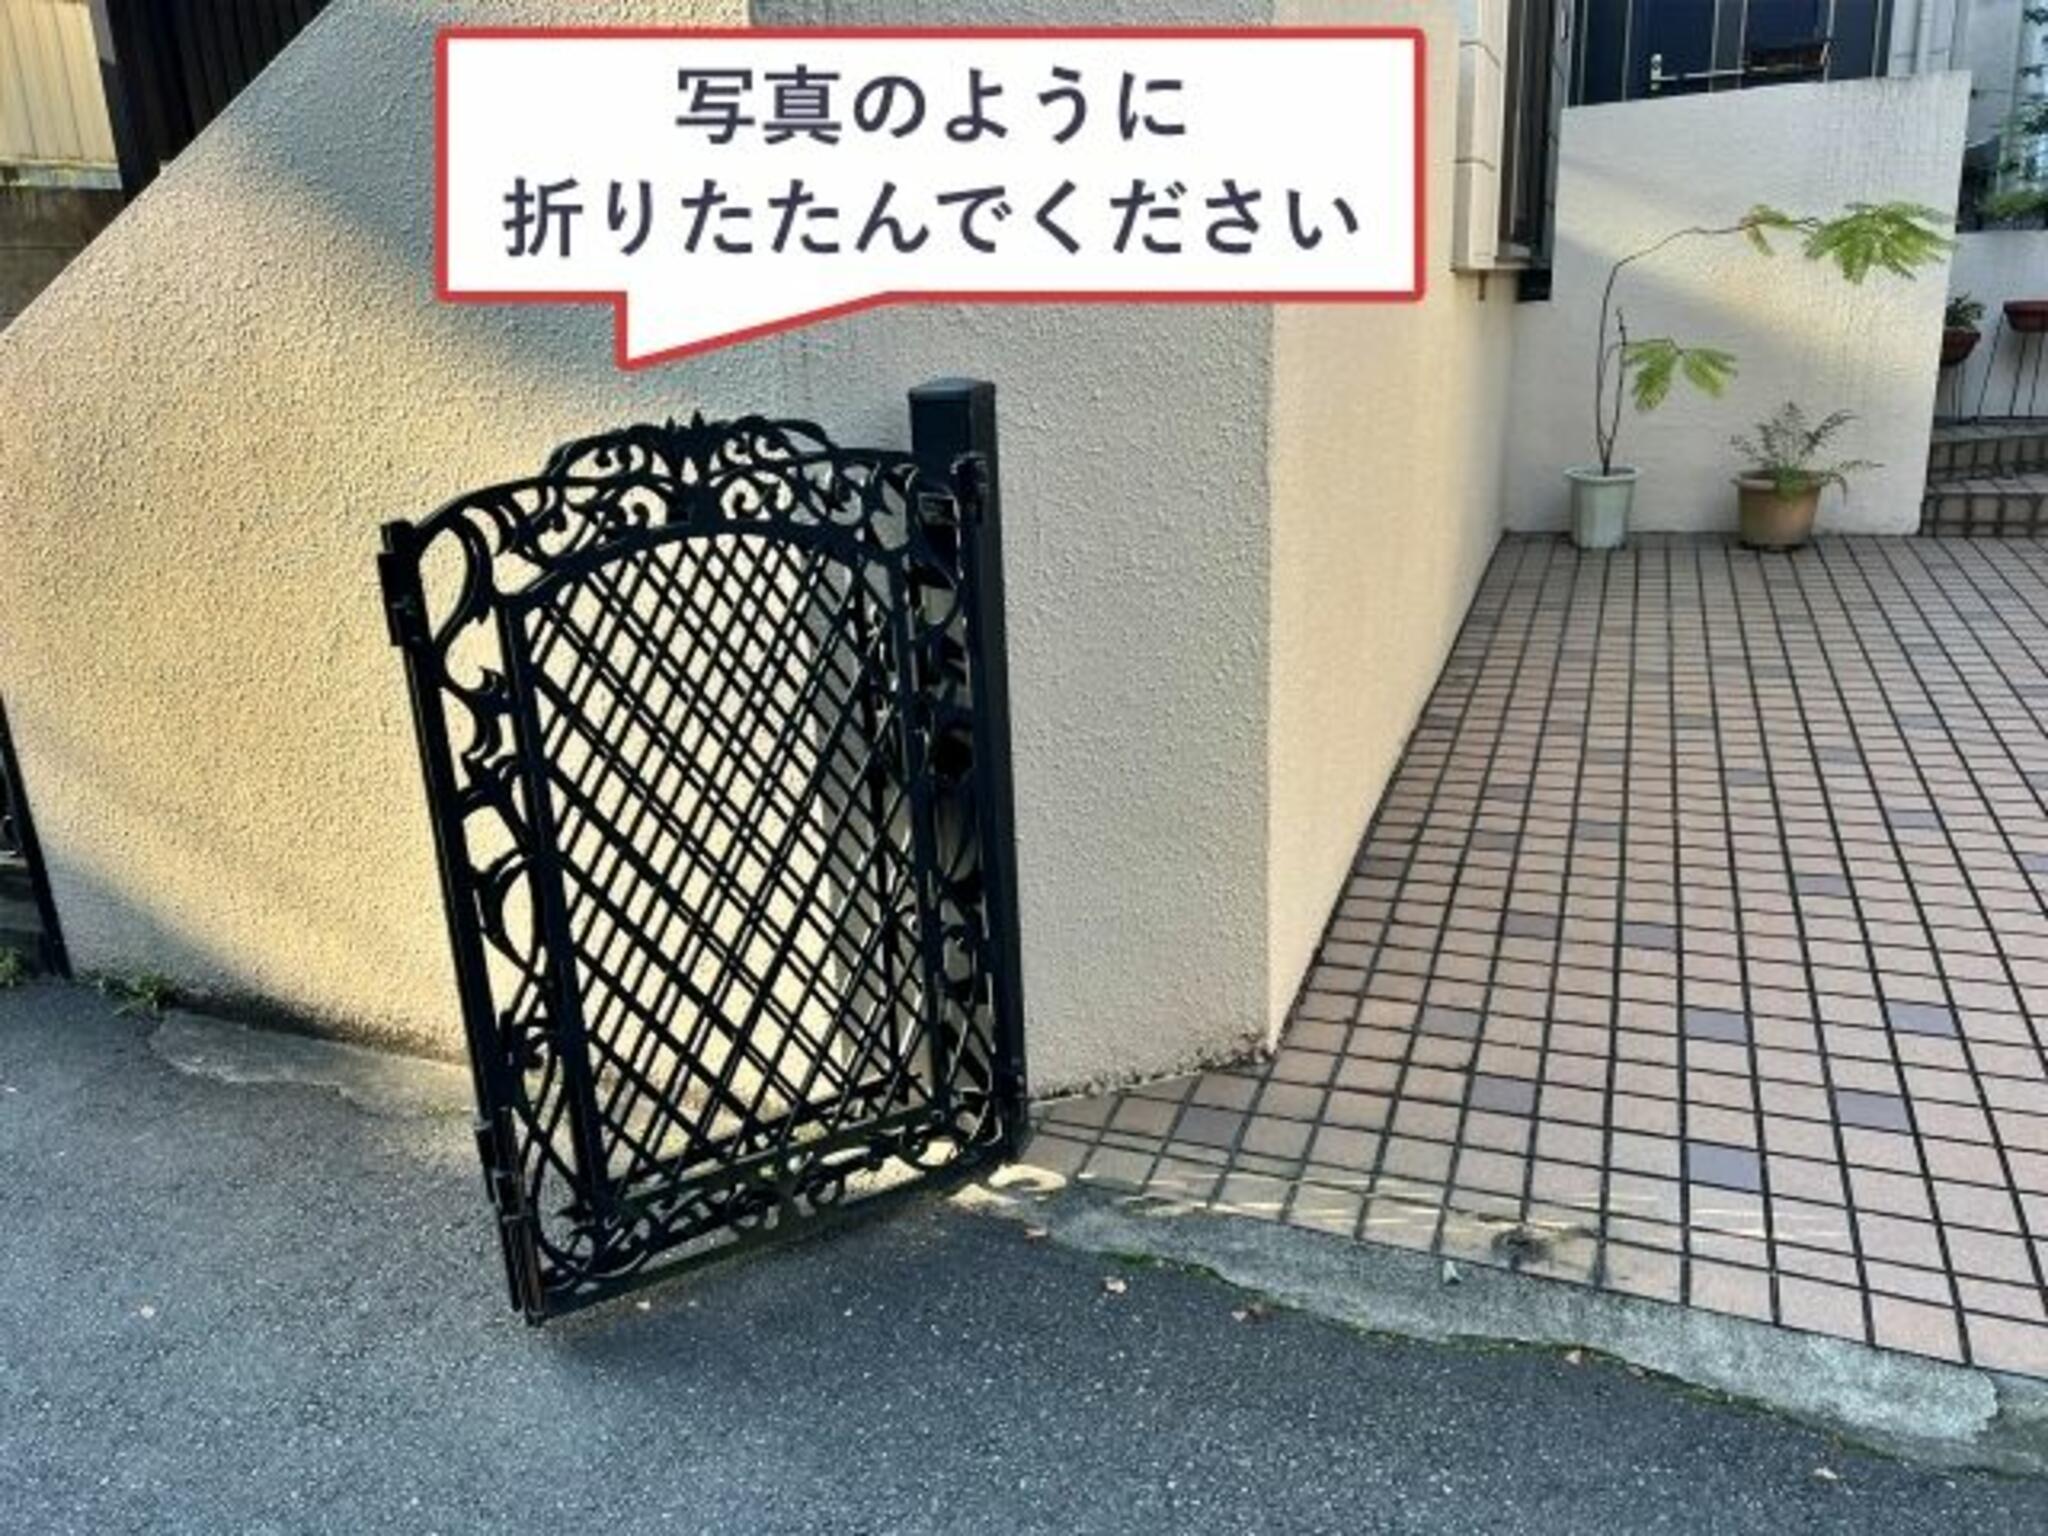 akippa駐車場:東京都新宿区喜久井町25の代表写真5